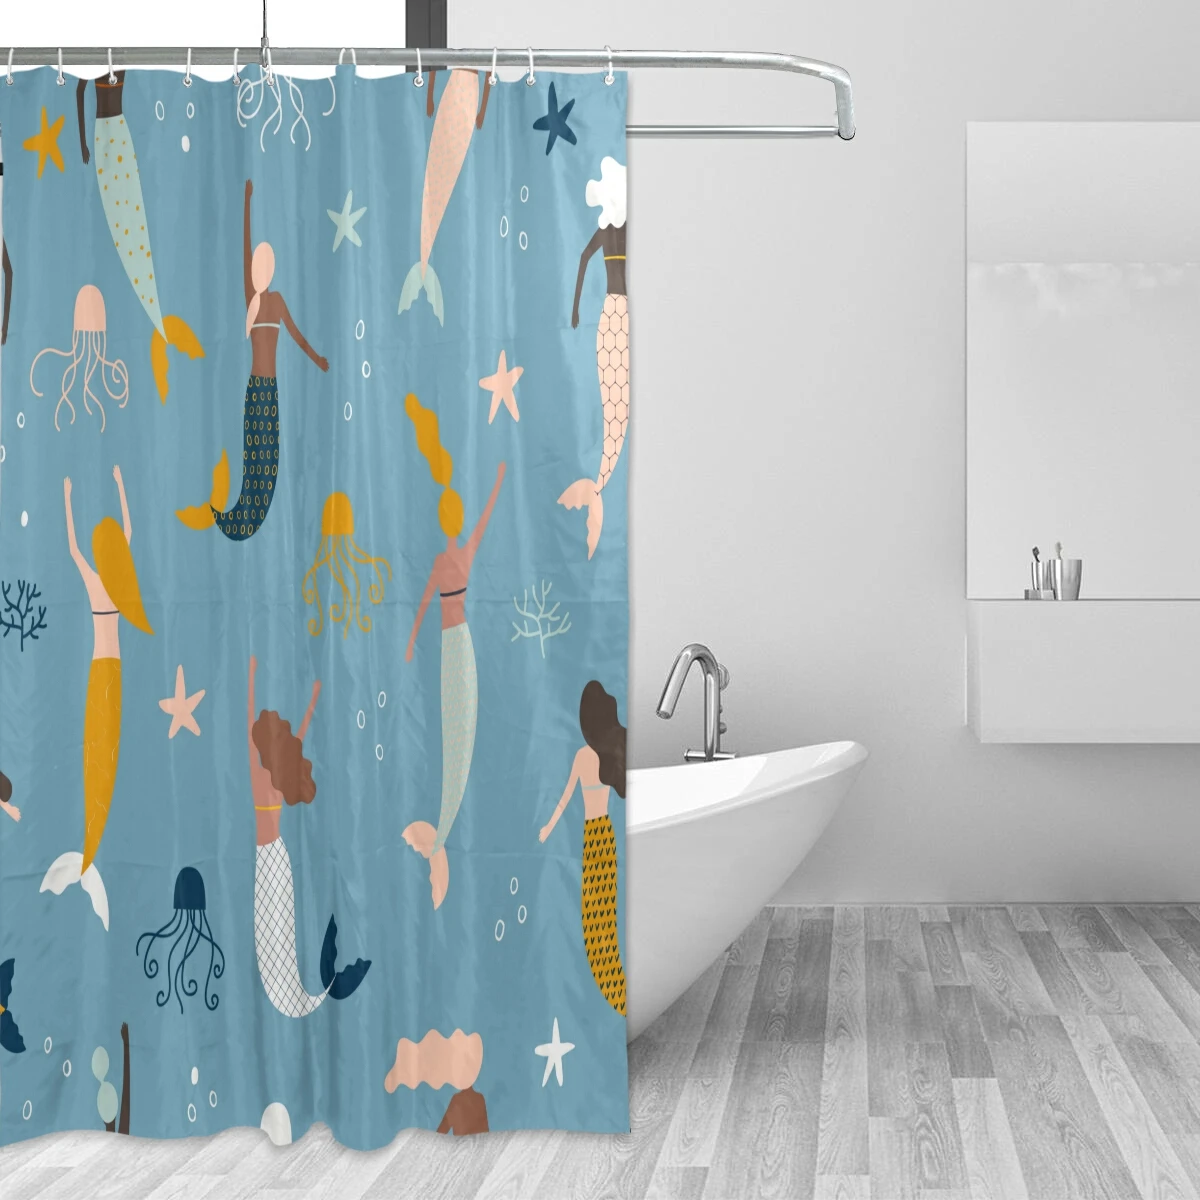 The Skeleton Theme Waterproof Fabric Home Decor Shower Curtain Bathroom Mat 